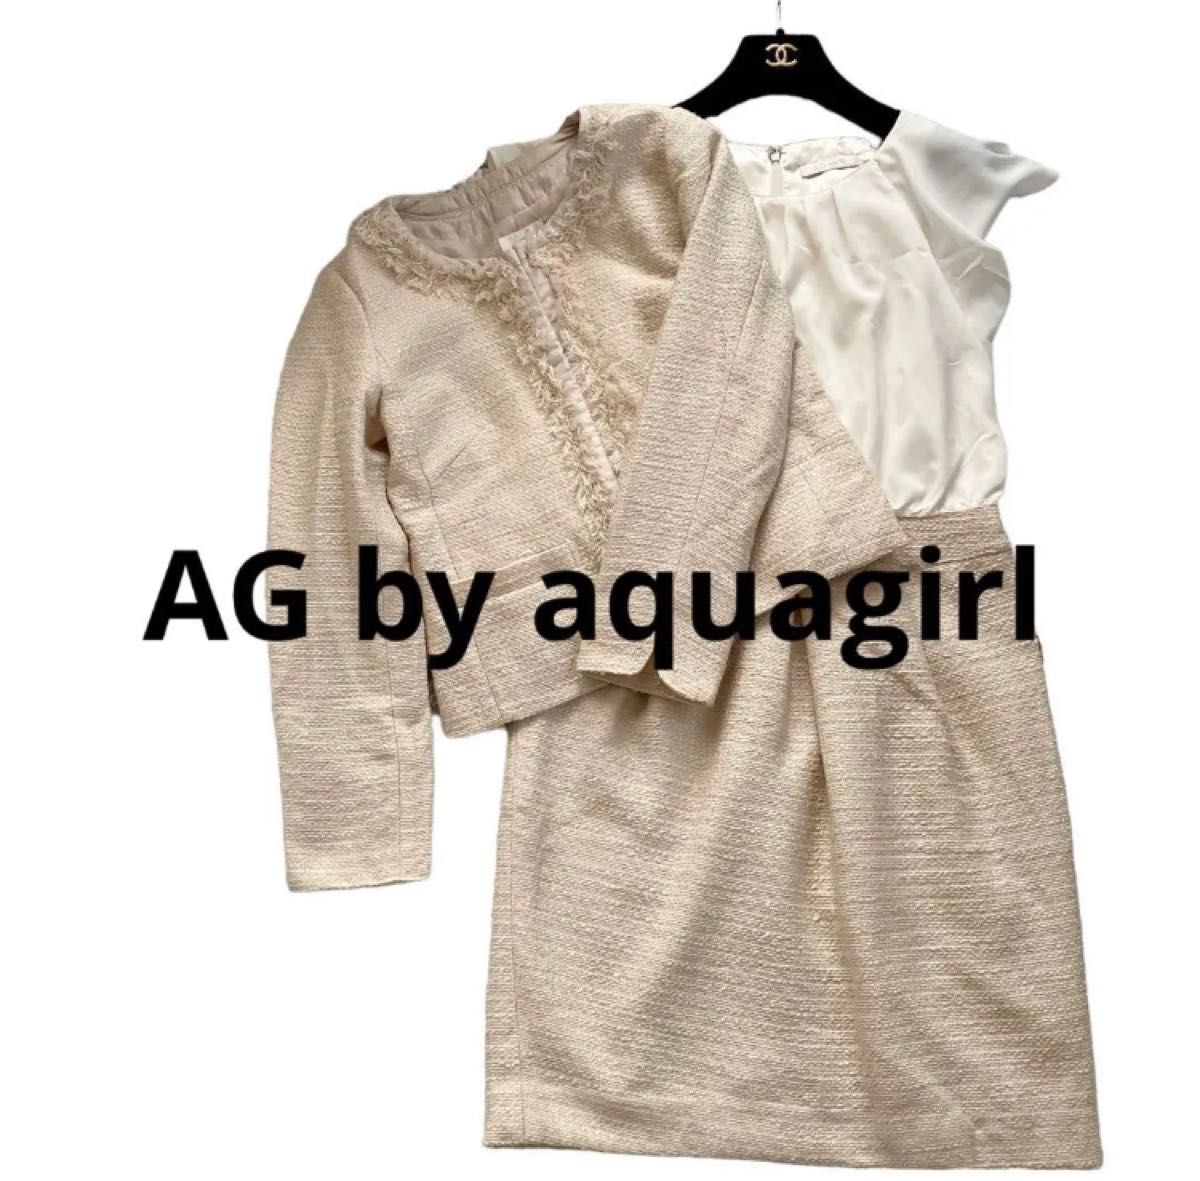 AGby aquagirlアクアガールベージュツイードワンピースジャケットスーツ ワンピーススーツ入学式卒業式セレモニースーツ